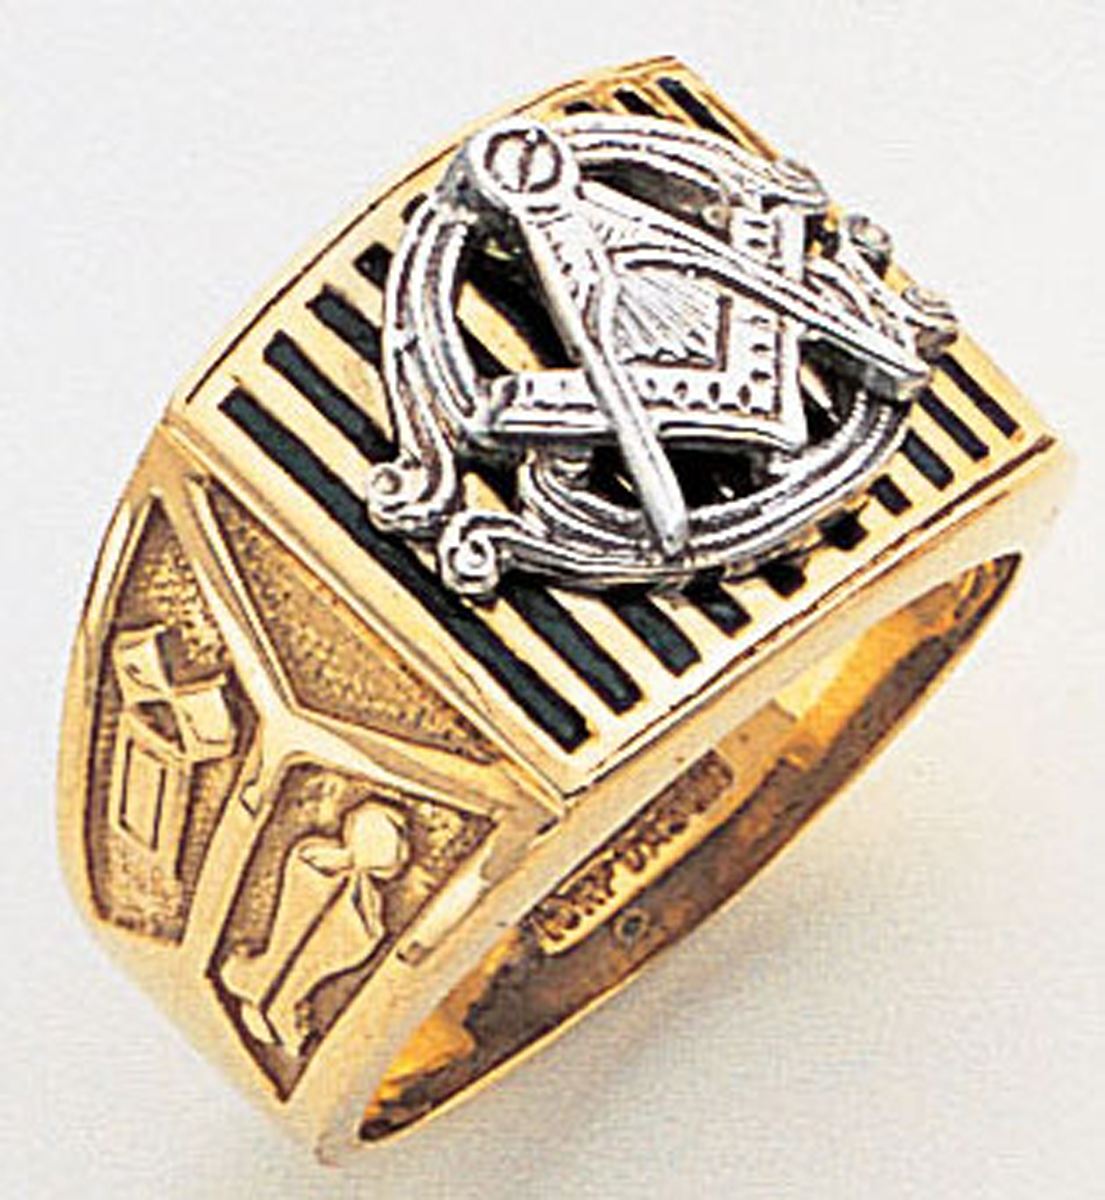 Gold Masonic Ring Open Back 3322